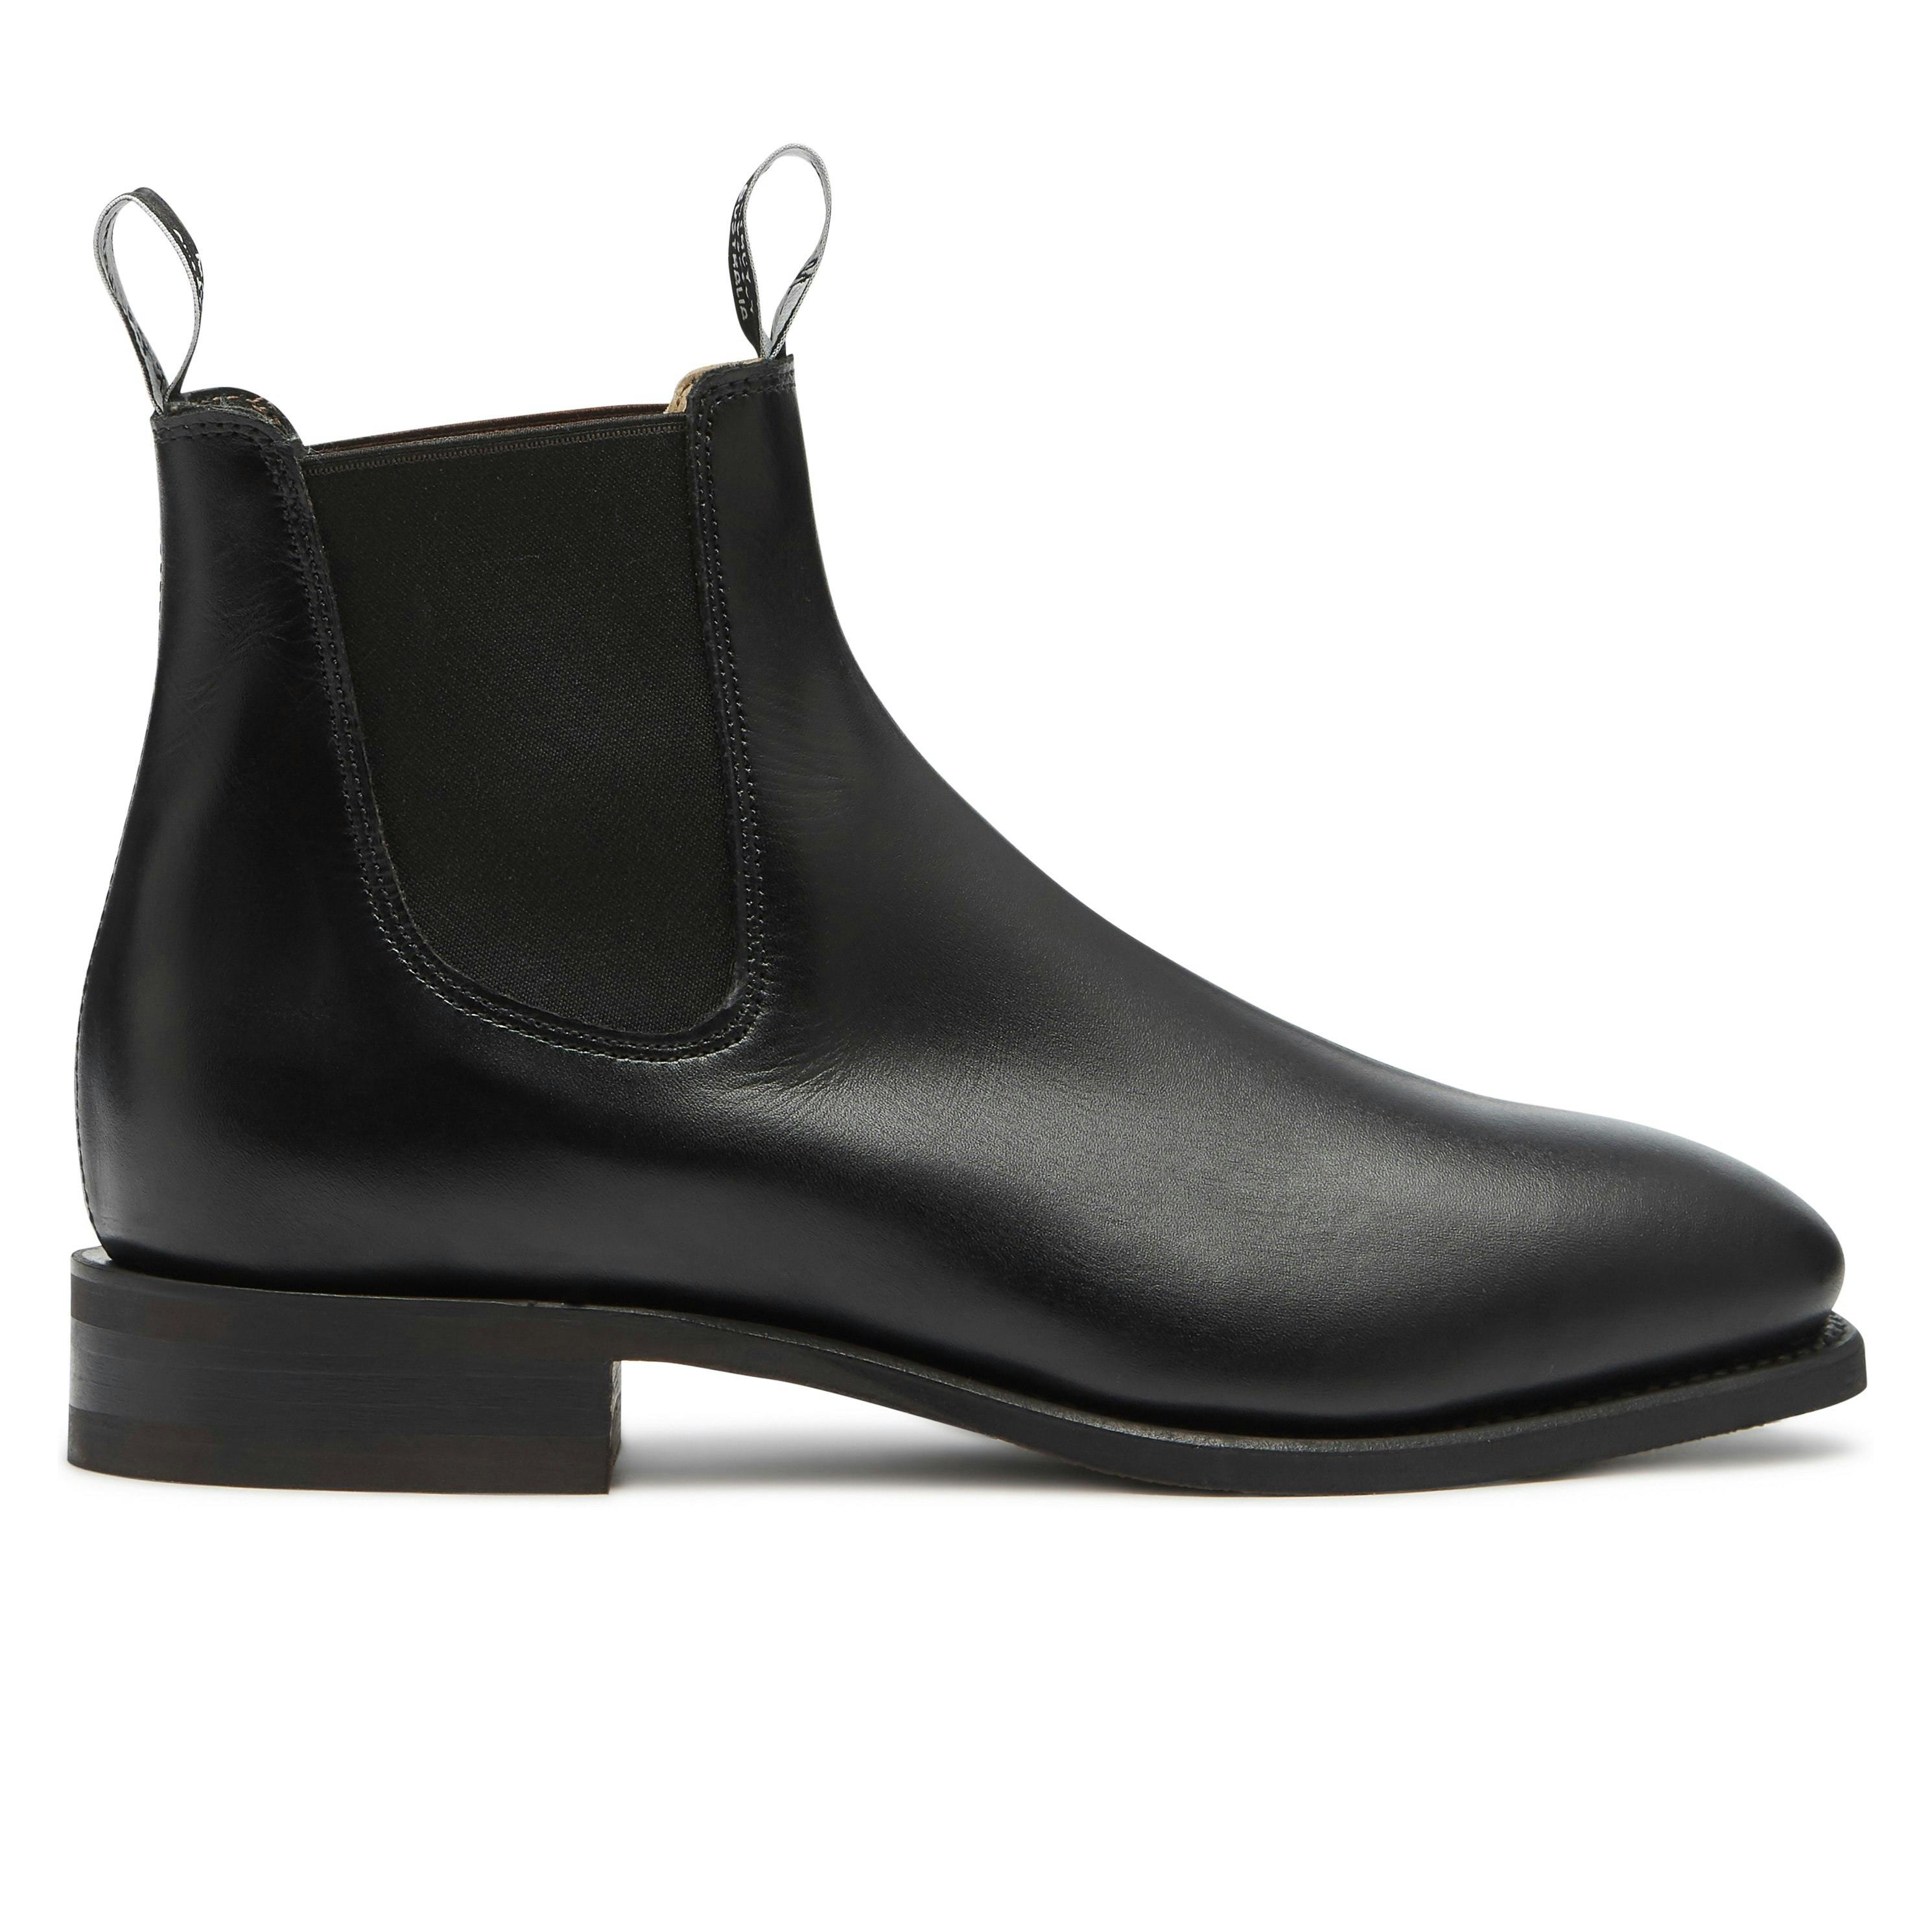 Black Comfort Craftsman boots, R.M.Williams Chelsea Boots